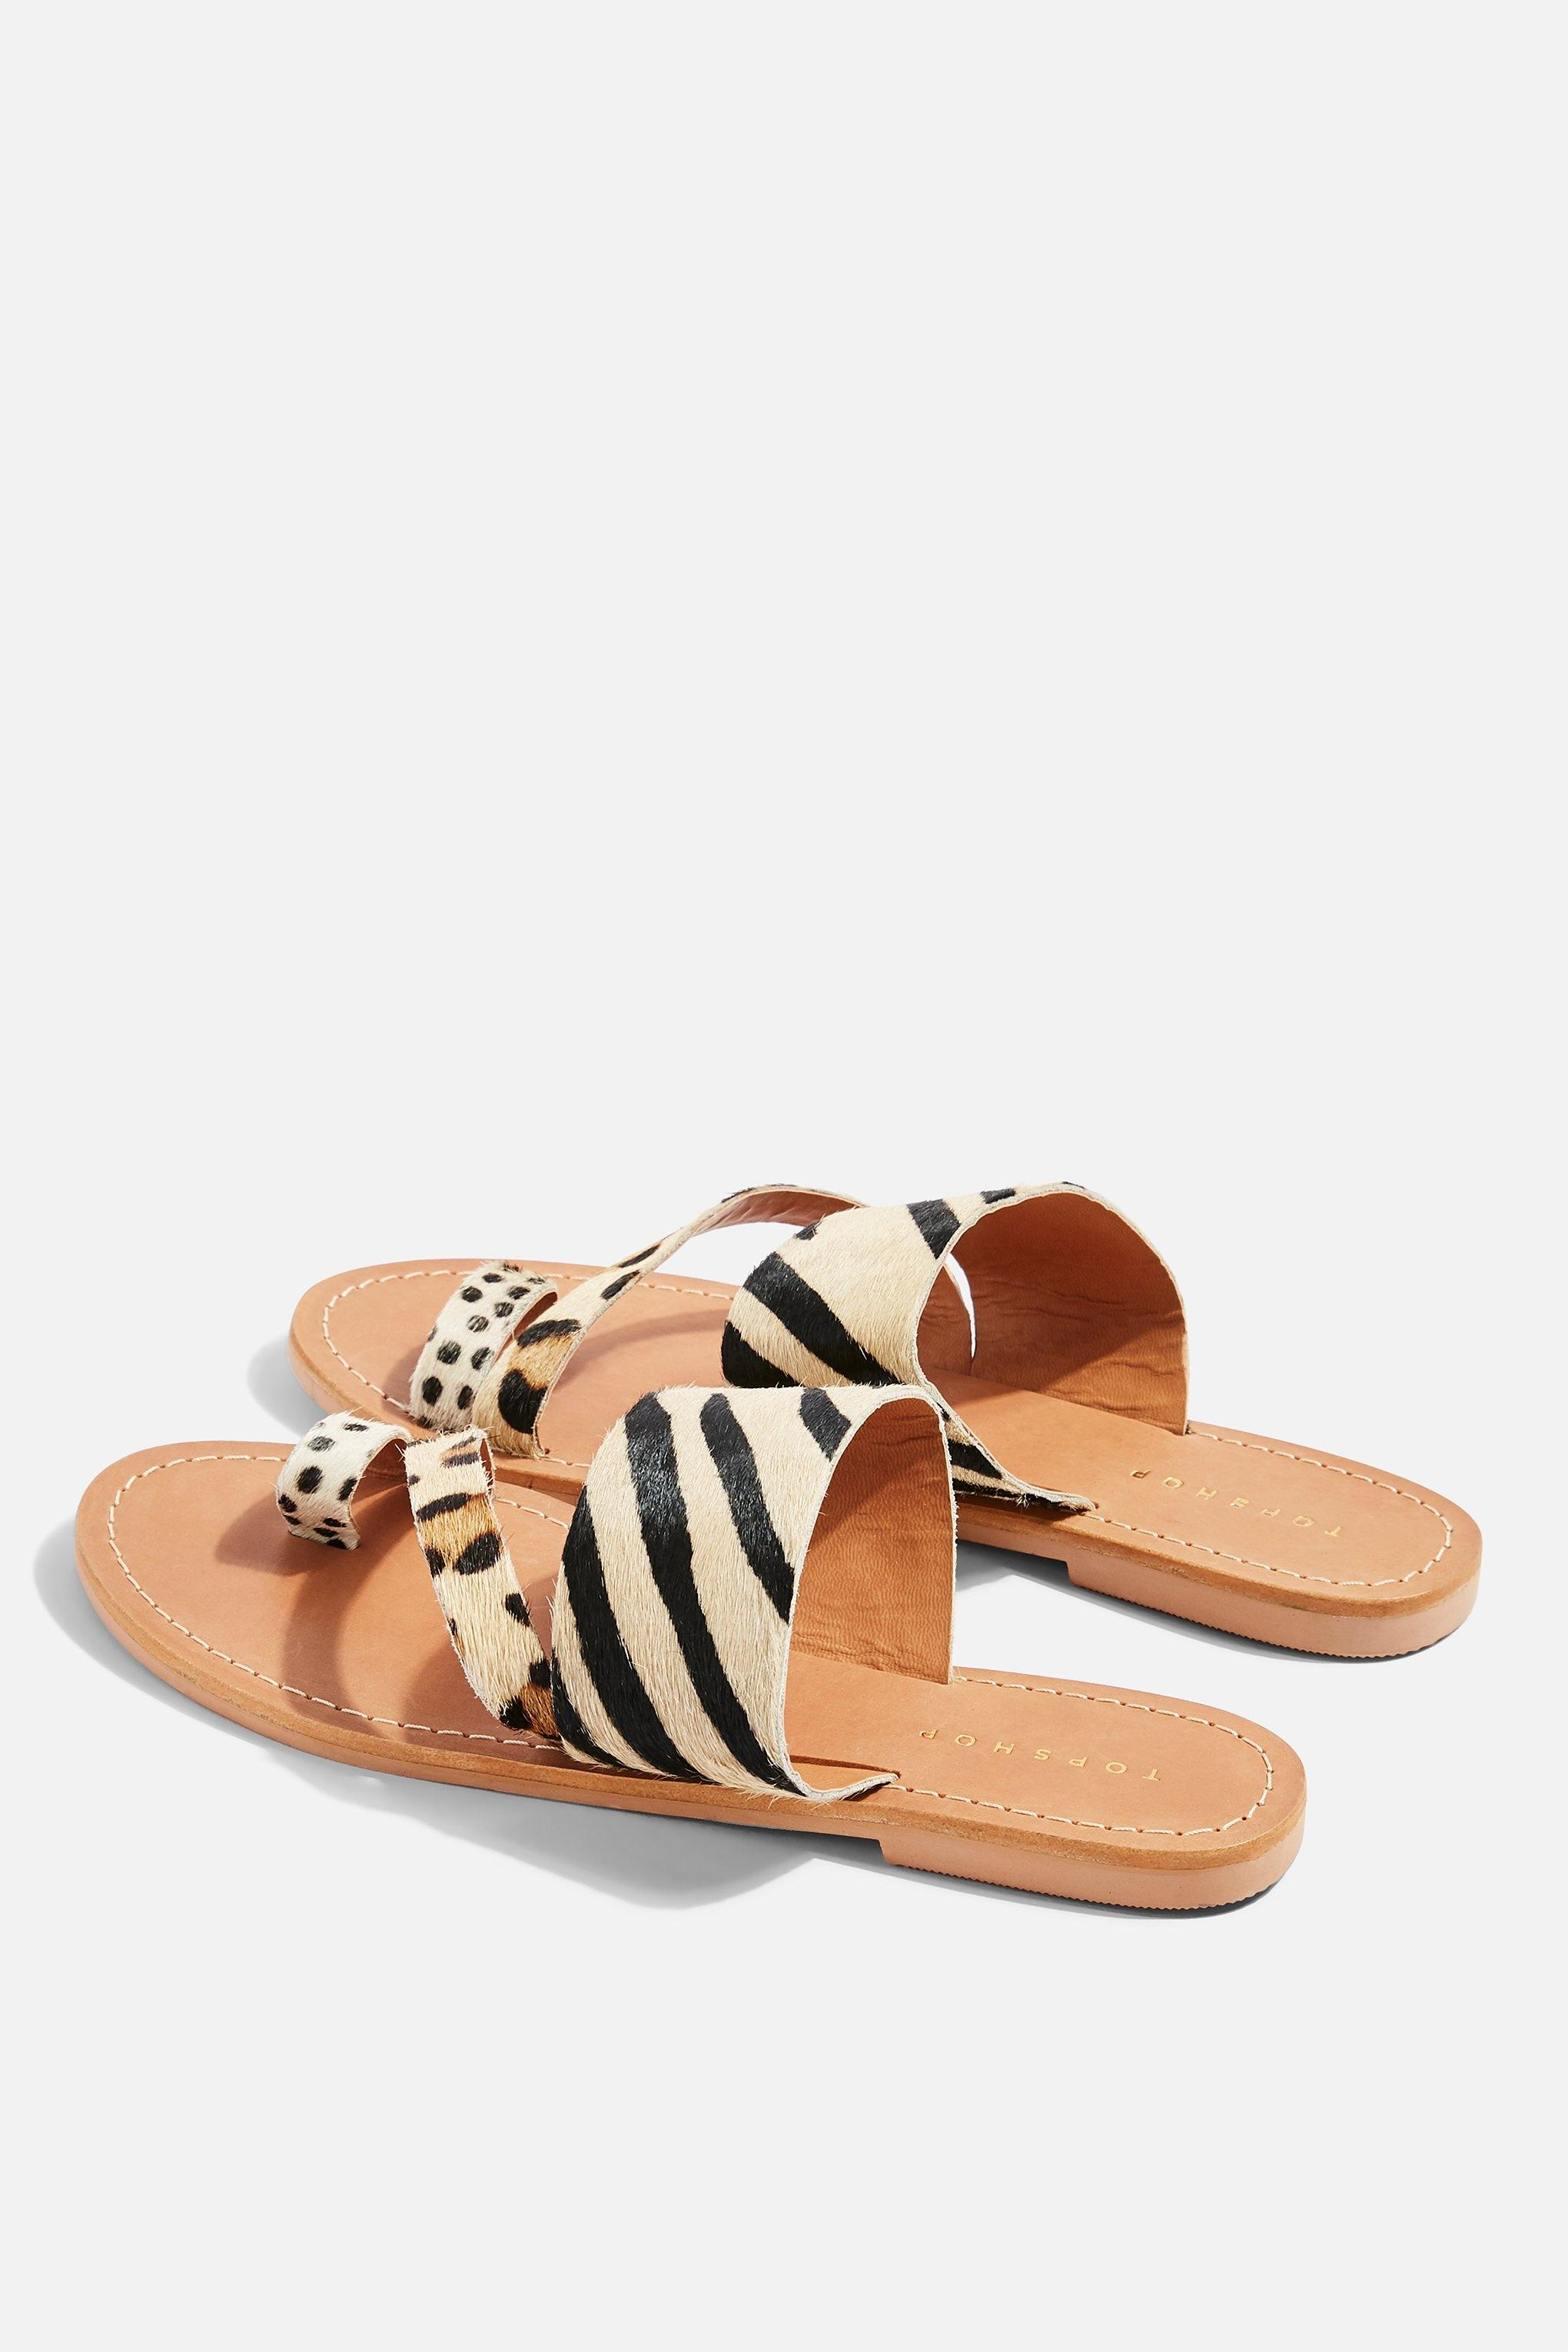 topshop honey sandals